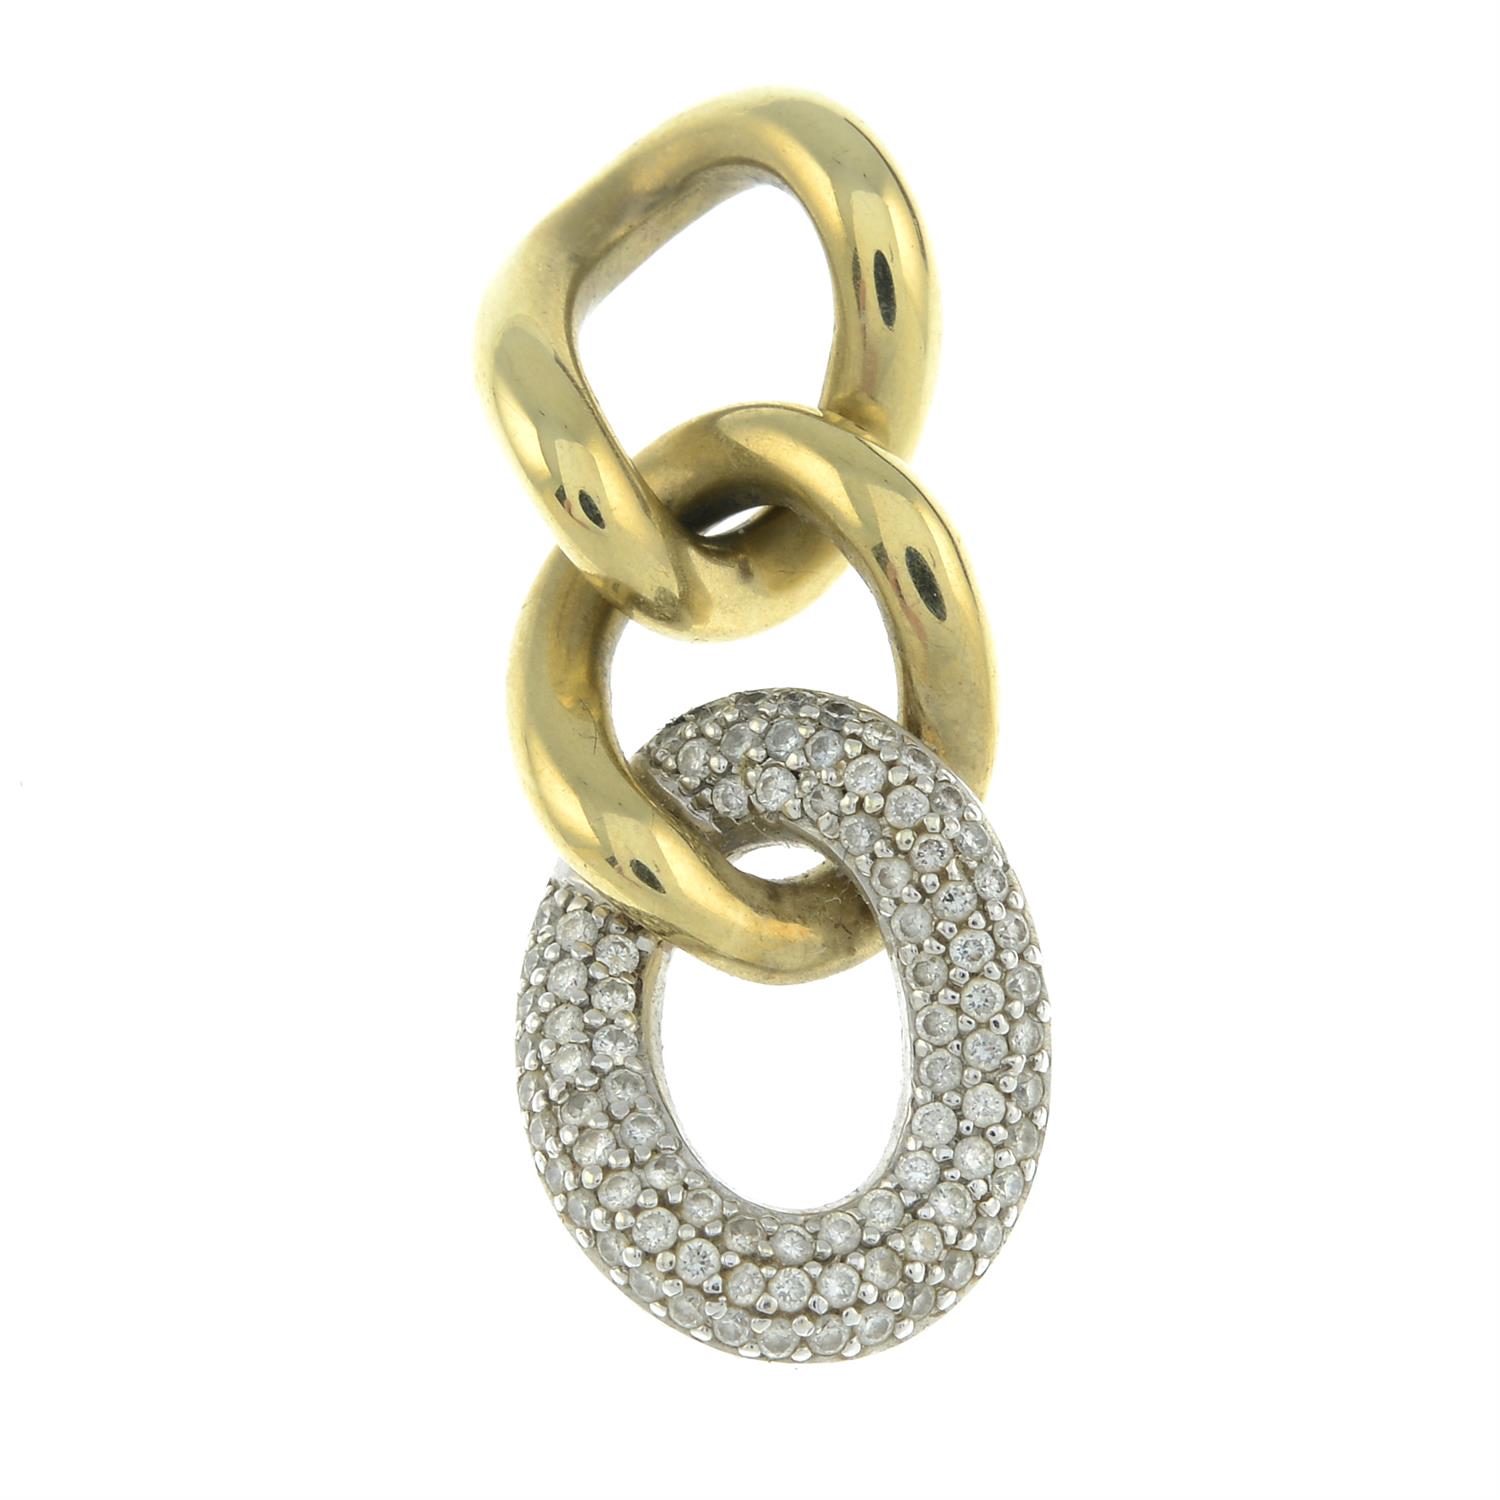 A 9ct gold bi-colour diamond pendant.